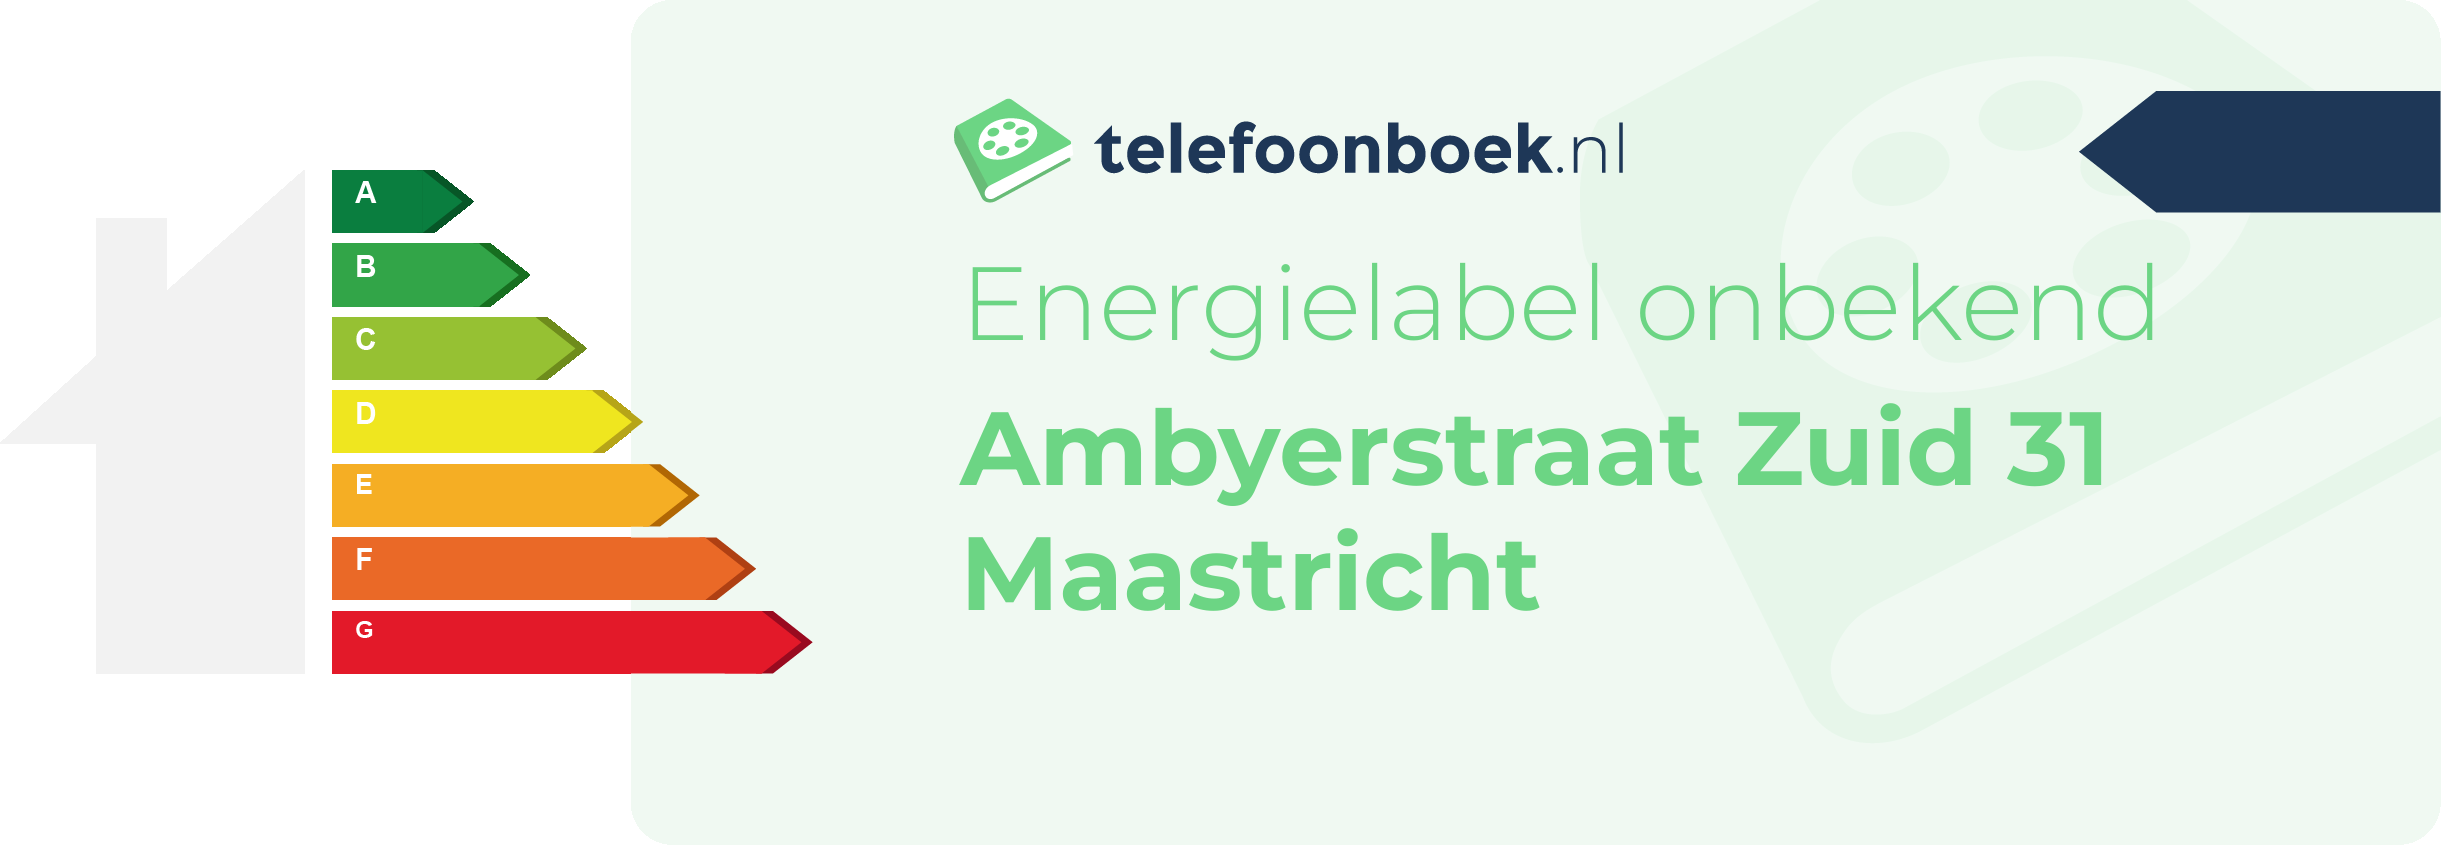 Energielabel Ambyerstraat Zuid 31 Maastricht